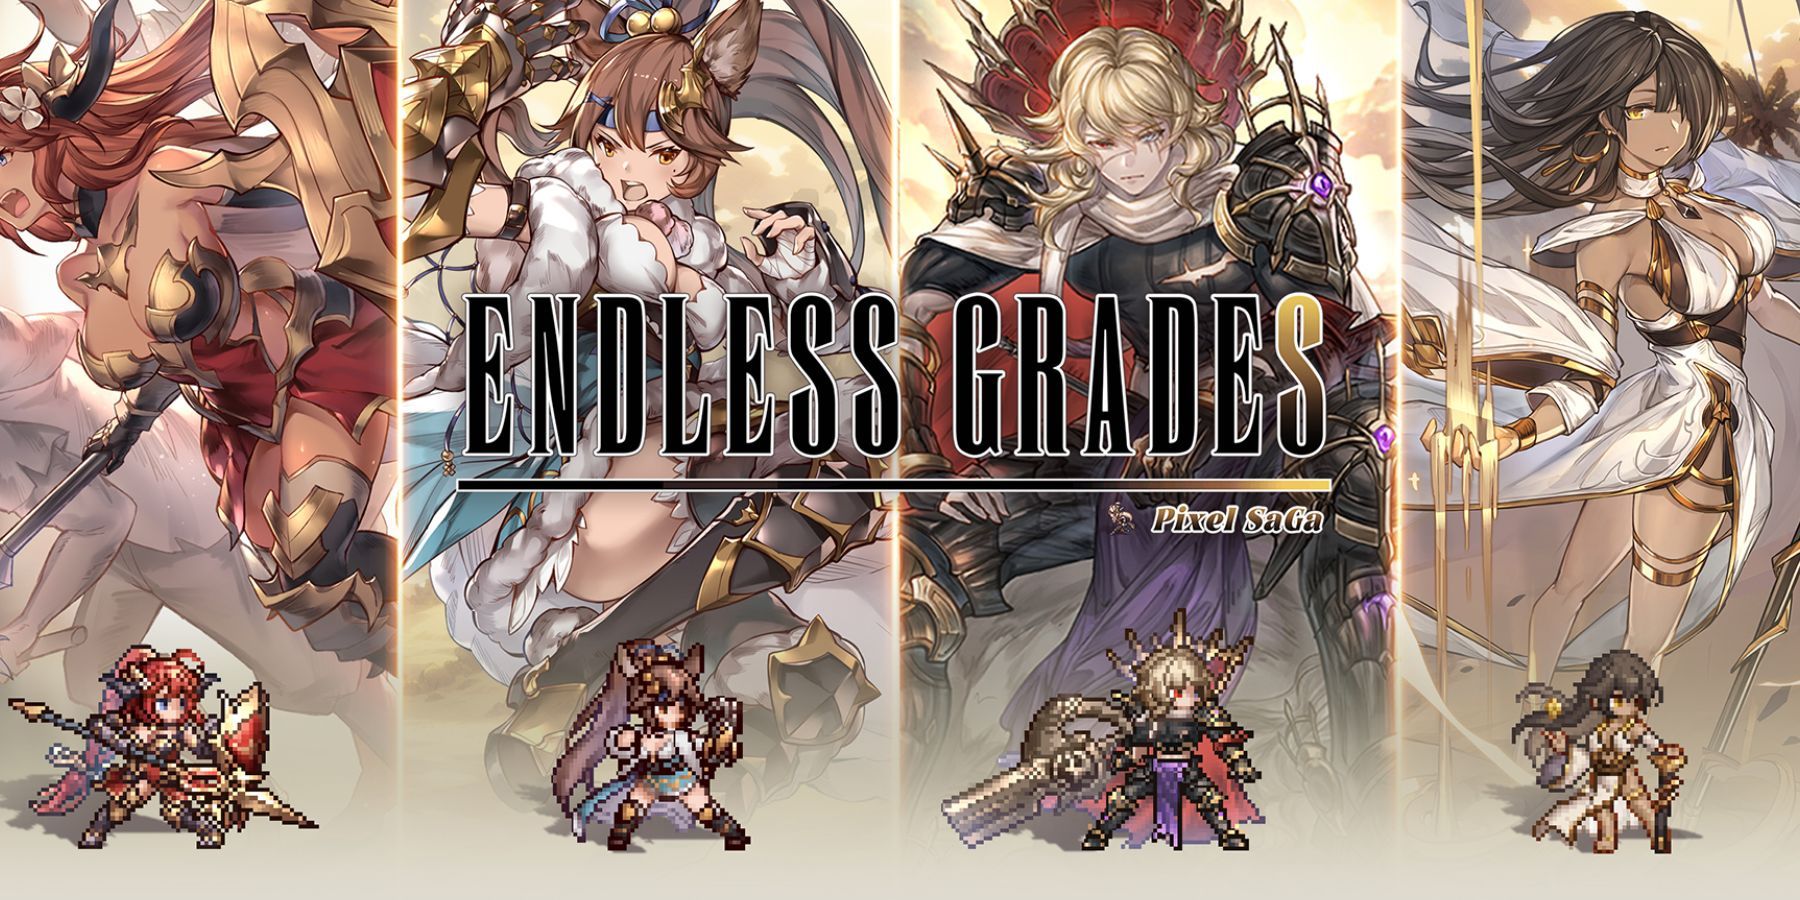 Endless Grades characters